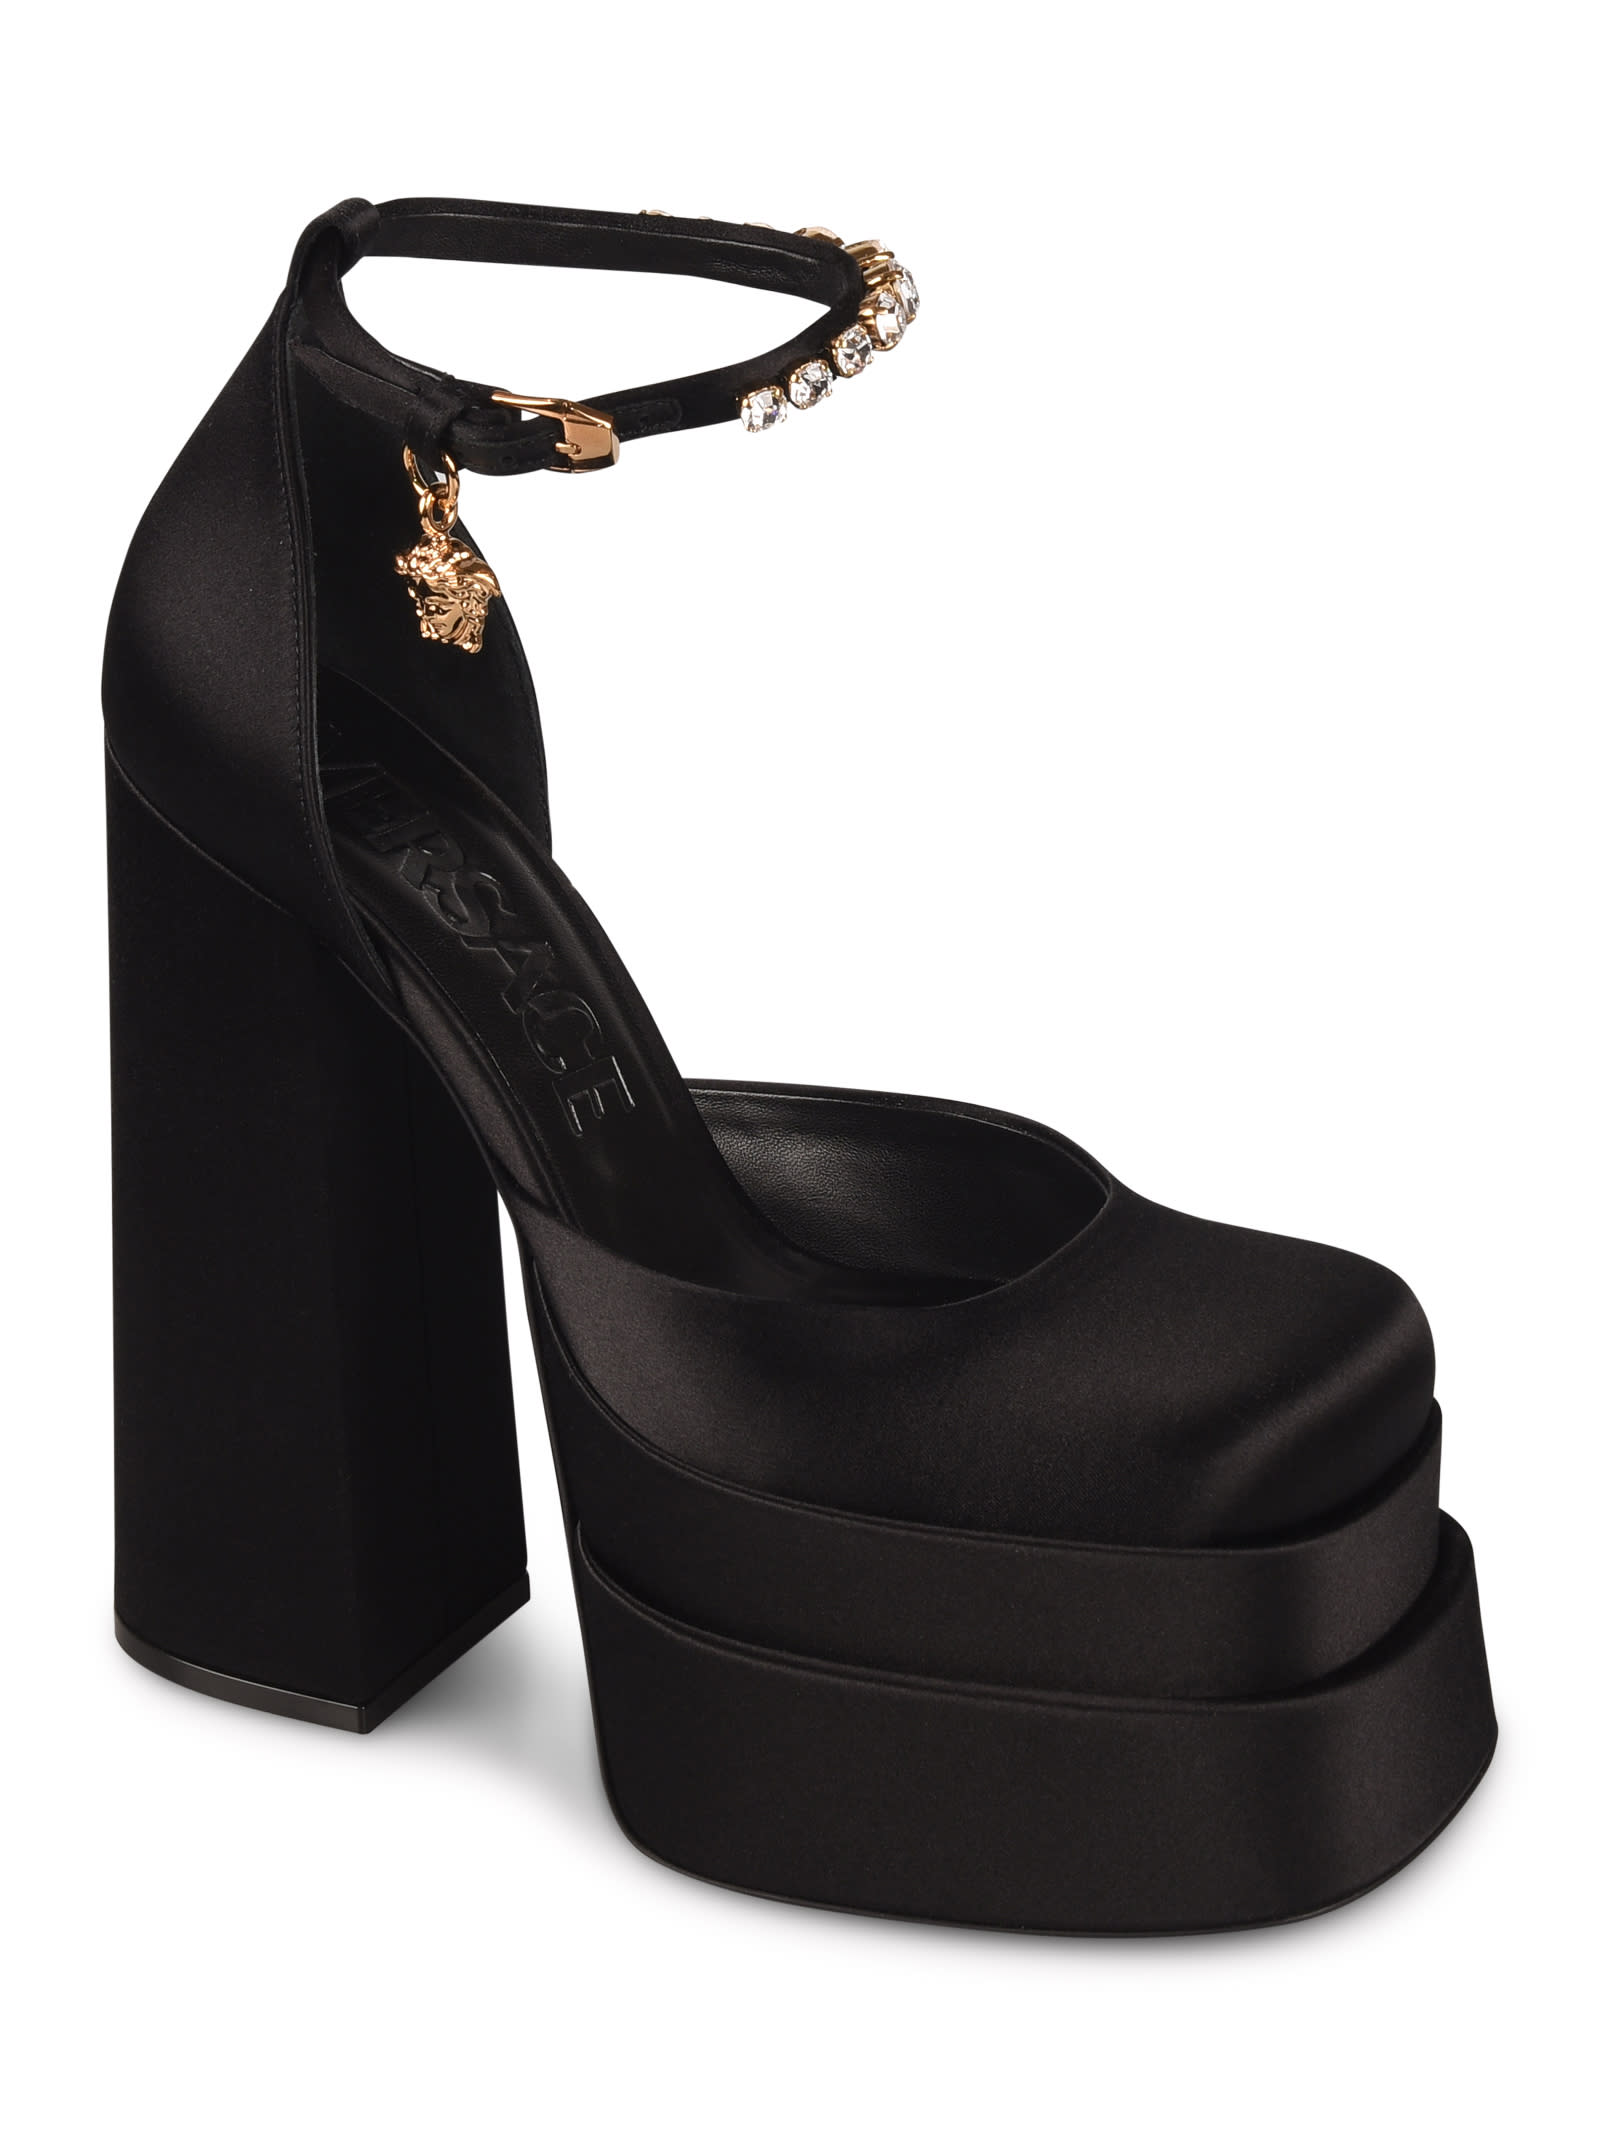 Versace Crystal Embellished Block Heel Wedge Sandals In Black/gold ...